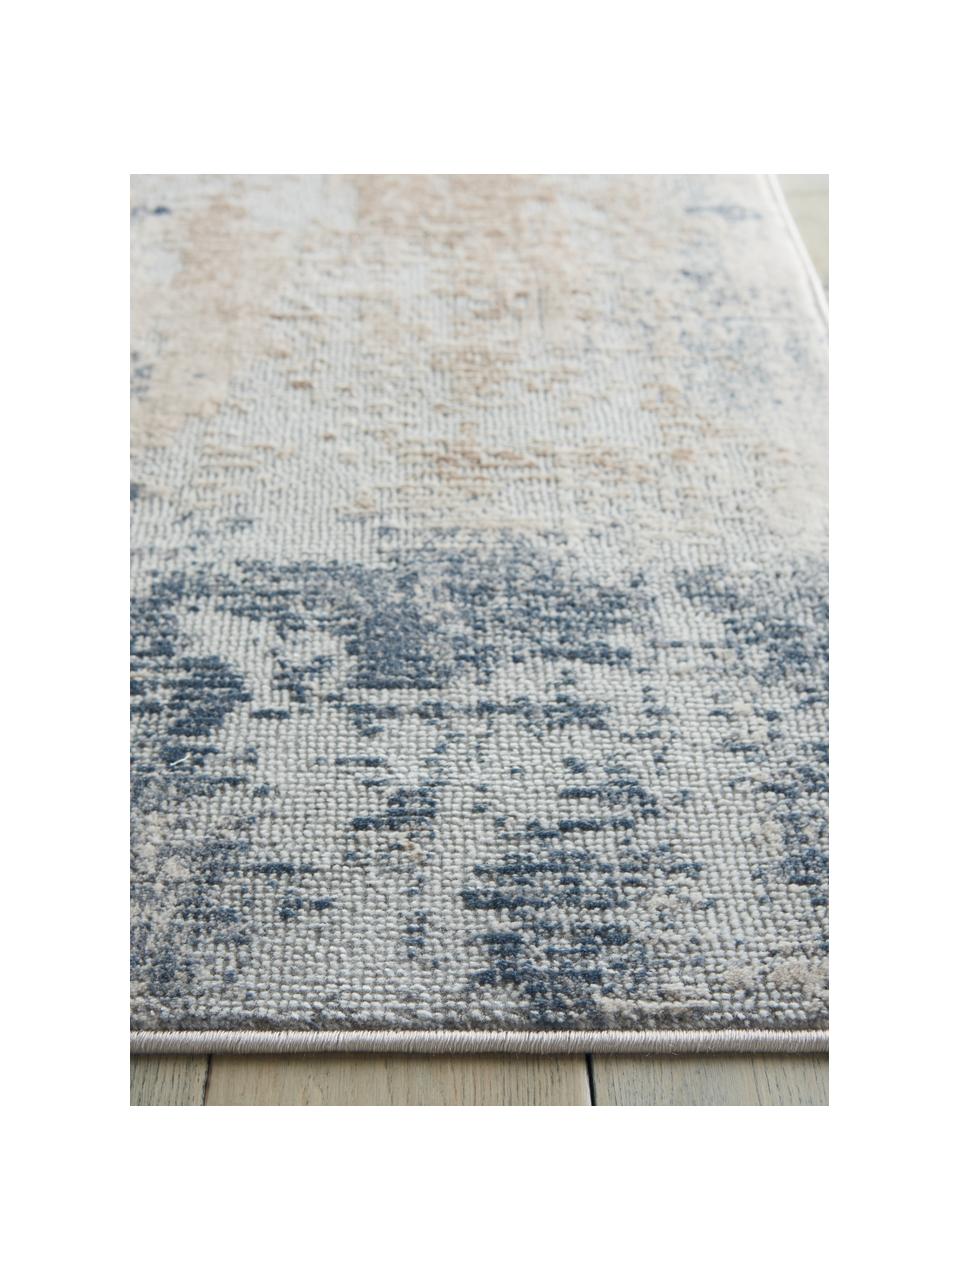 Designteppich Rustic Textures II in Beige/Grau, Flor: 51% Polypropylen, 49% Pol, Beigetöne, Grau, B 240 x L 320 cm (Größe L)